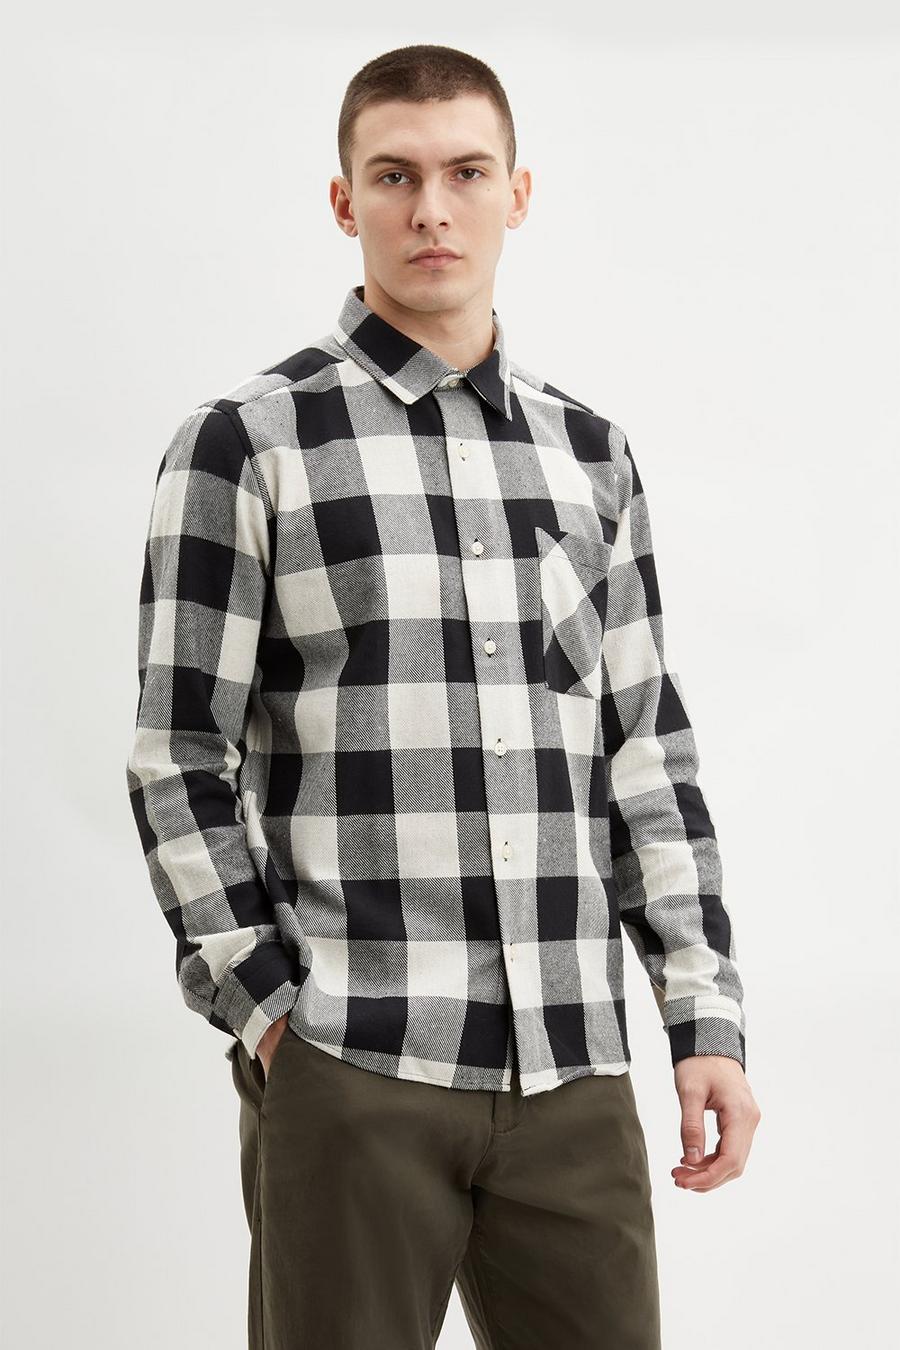 Men's Shirts | Casual, Formal & Check Shirts | Burton